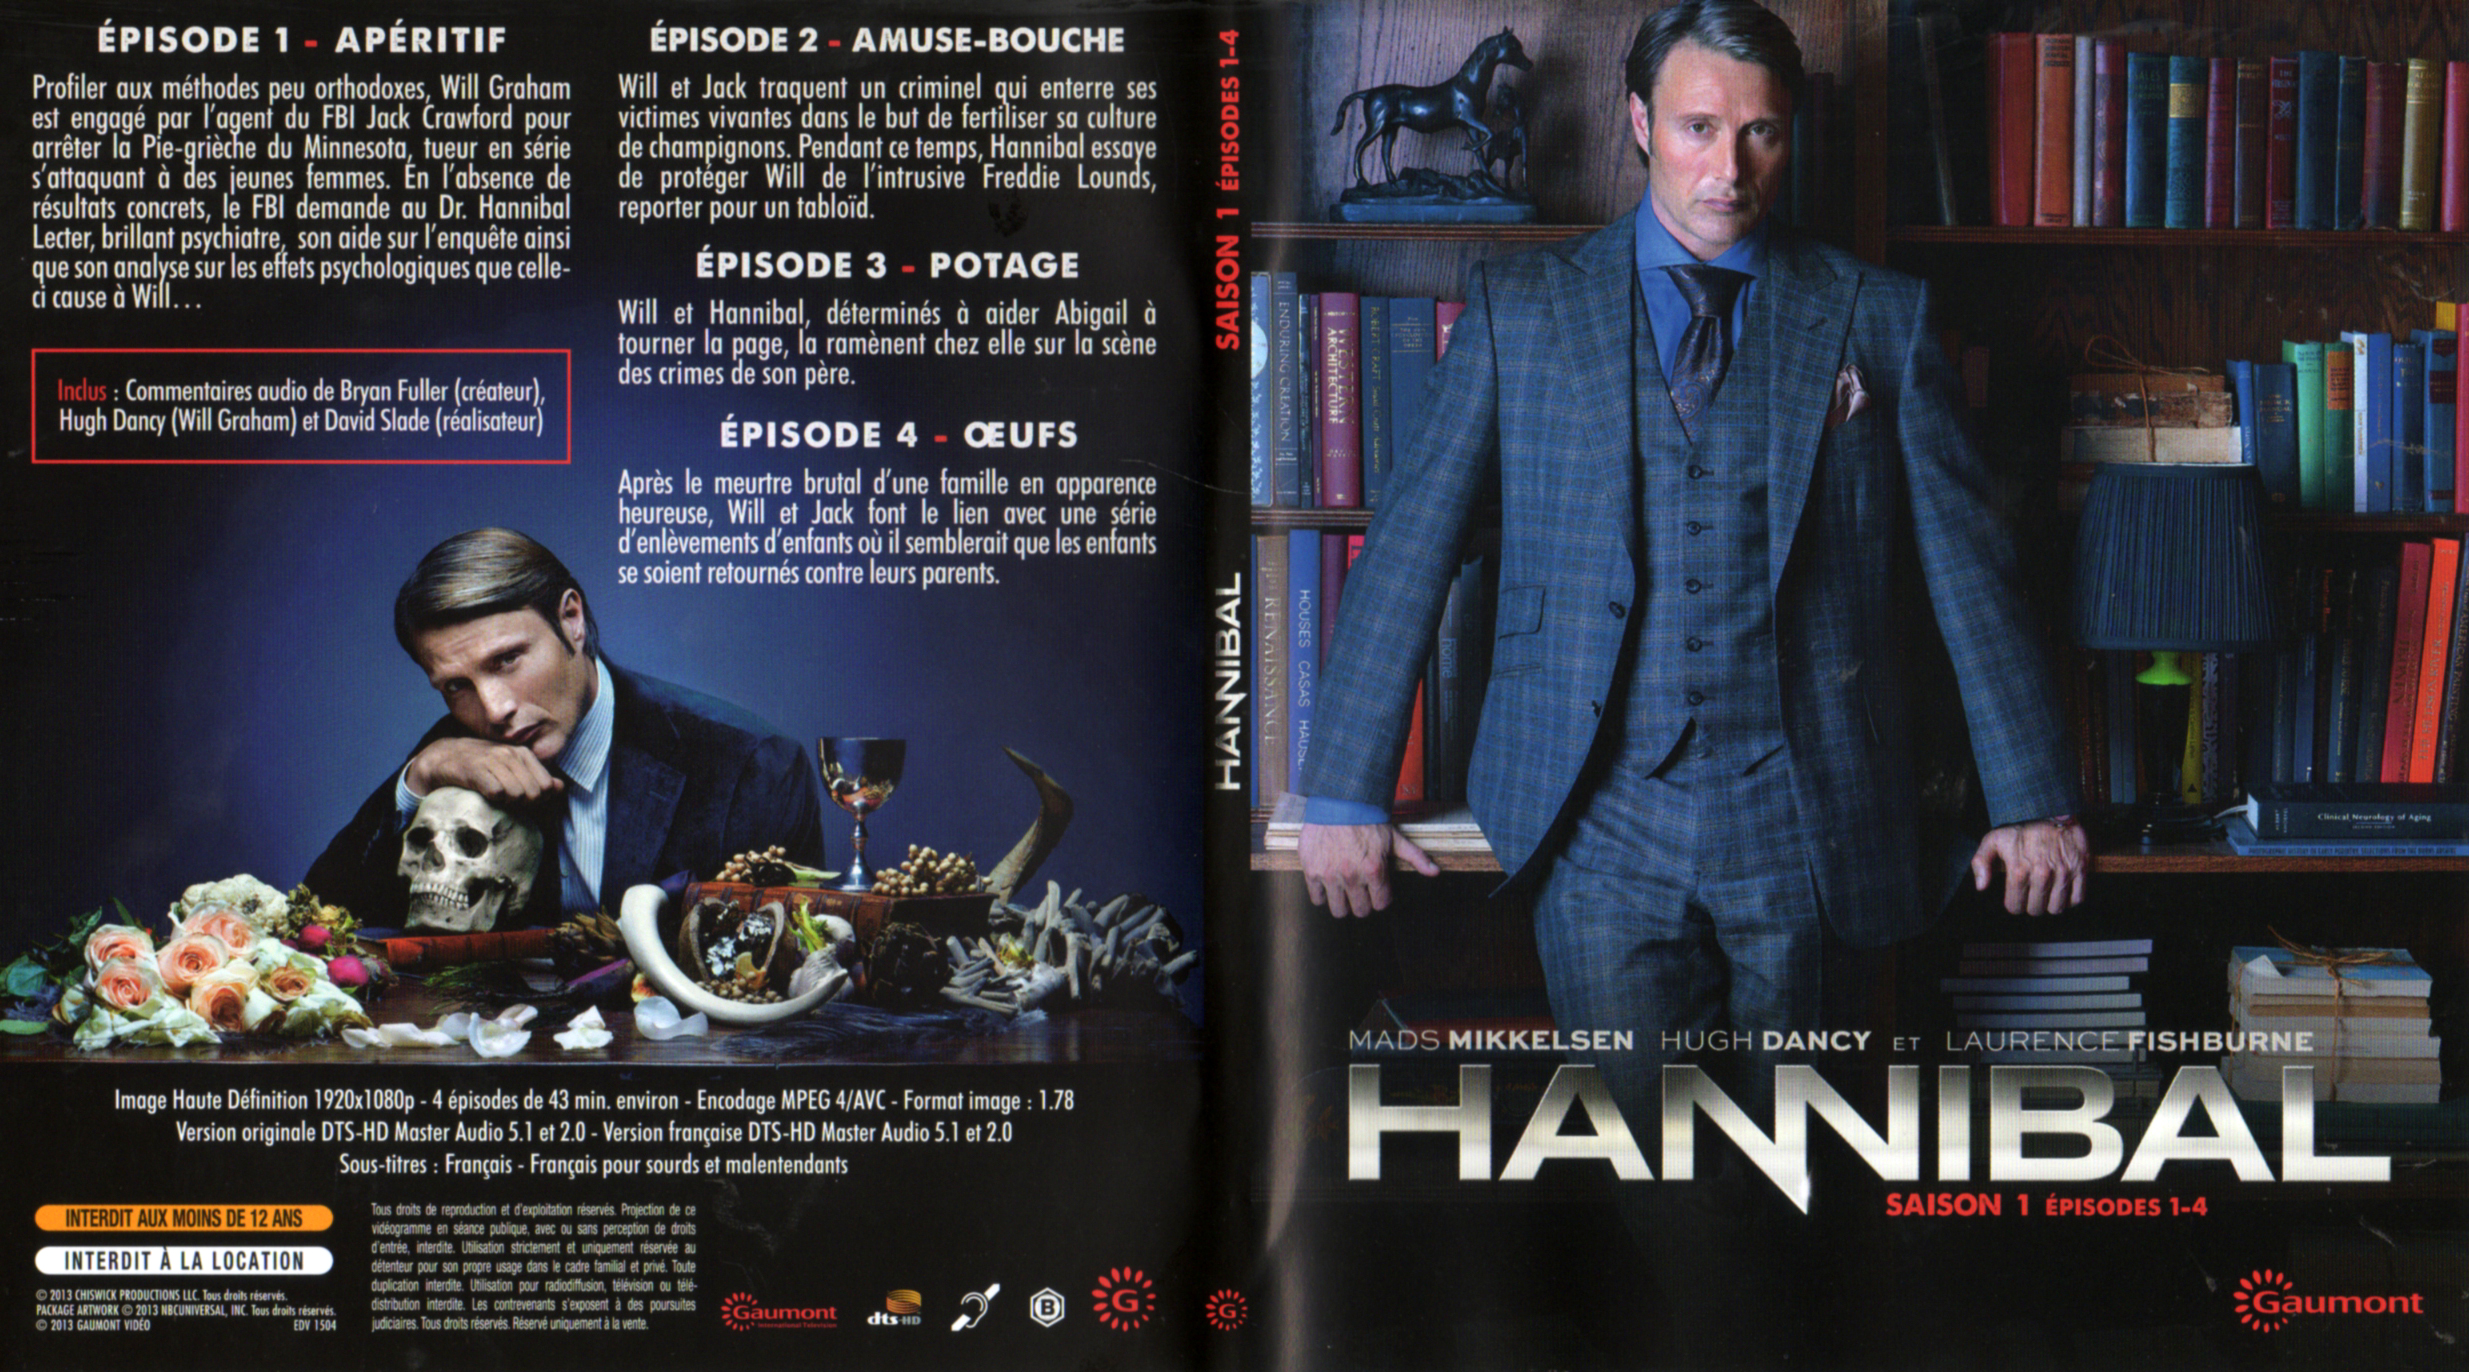 Jaquette DVD Hannibal Saison 1 Ep 1-4 (BLU-RAY)